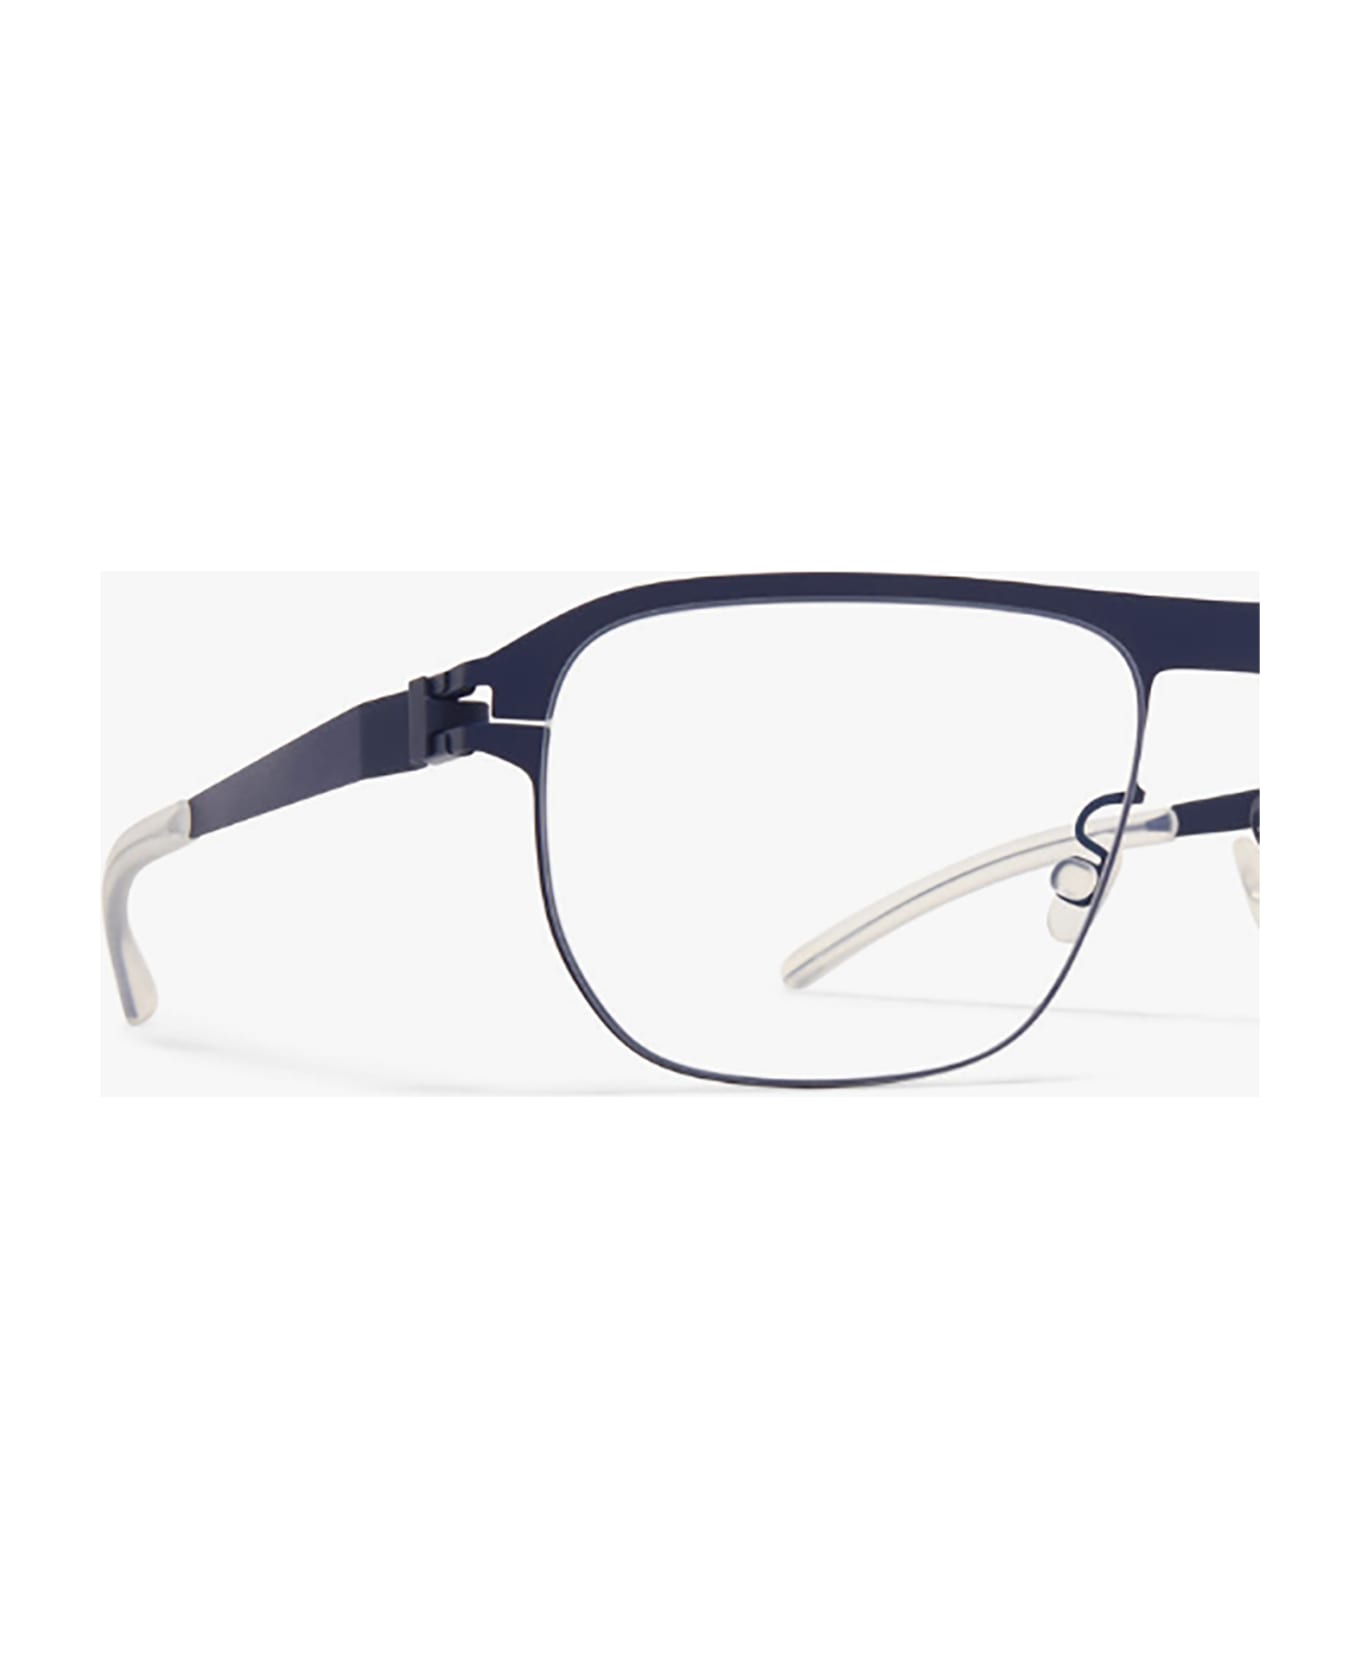 Mykita LORENZO Eyewear - Navy Clear